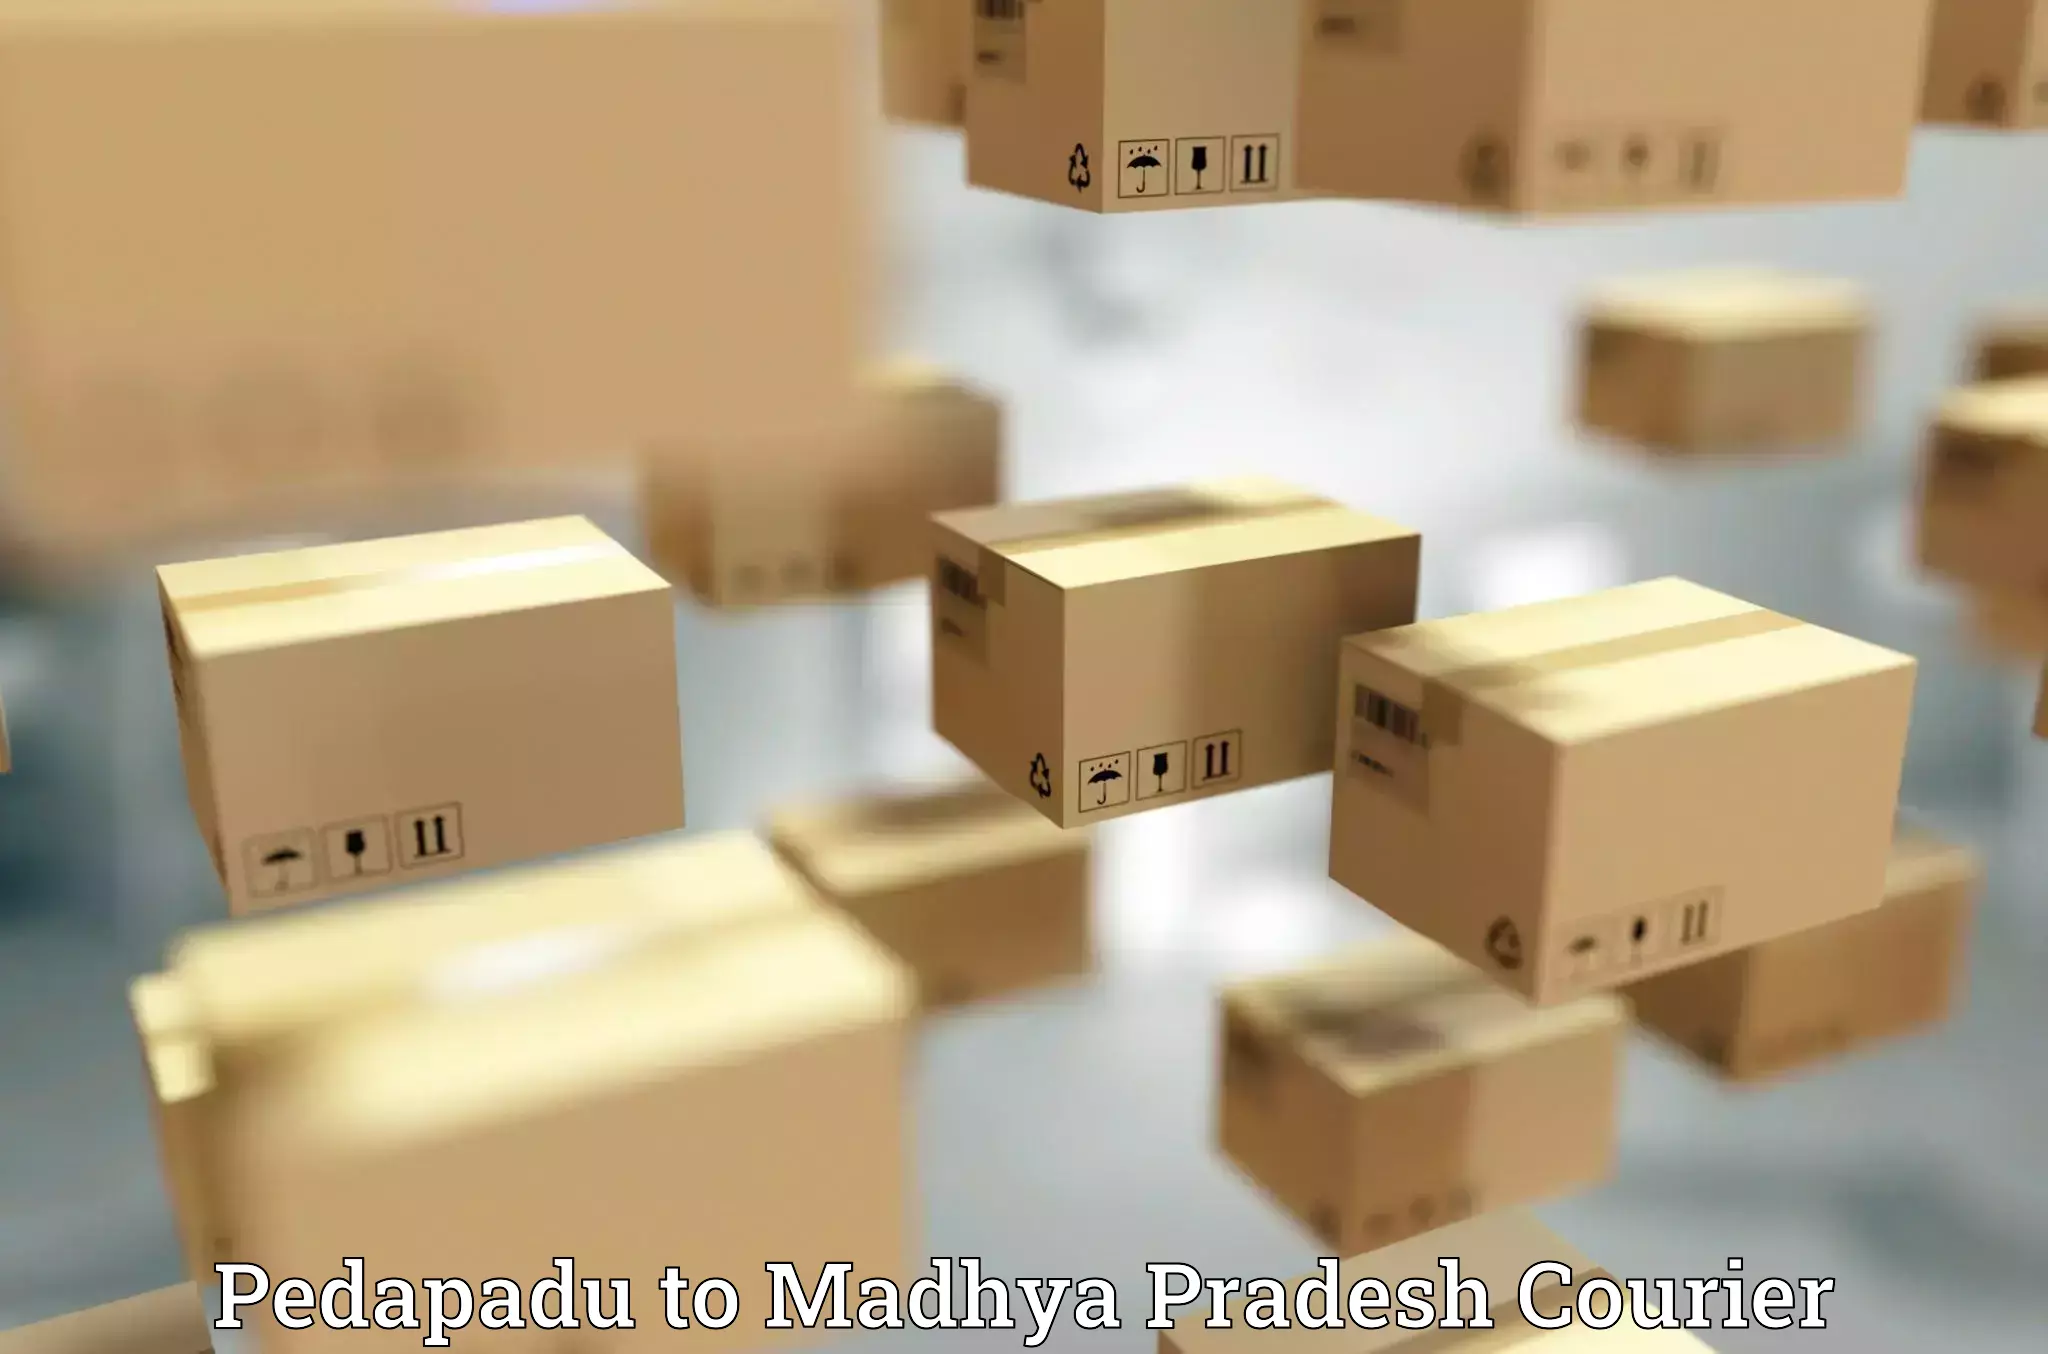 Reliable package handling Pedapadu to Gwalior